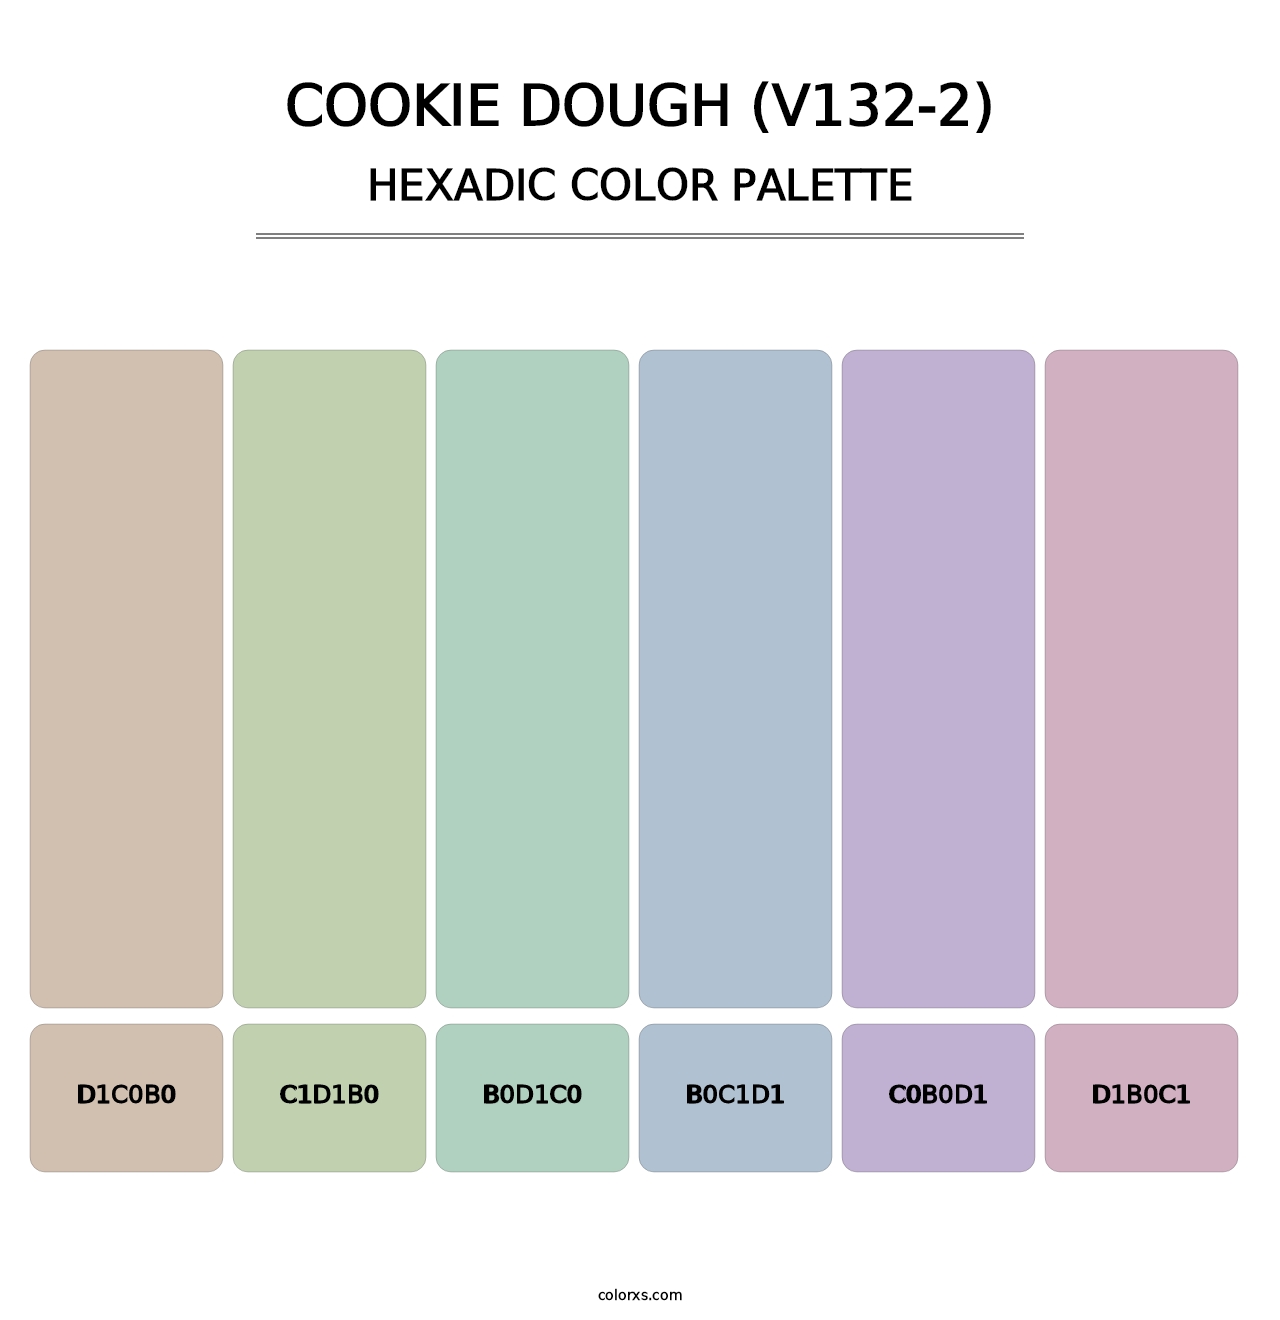 Cookie Dough (V132-2) - Hexadic Color Palette